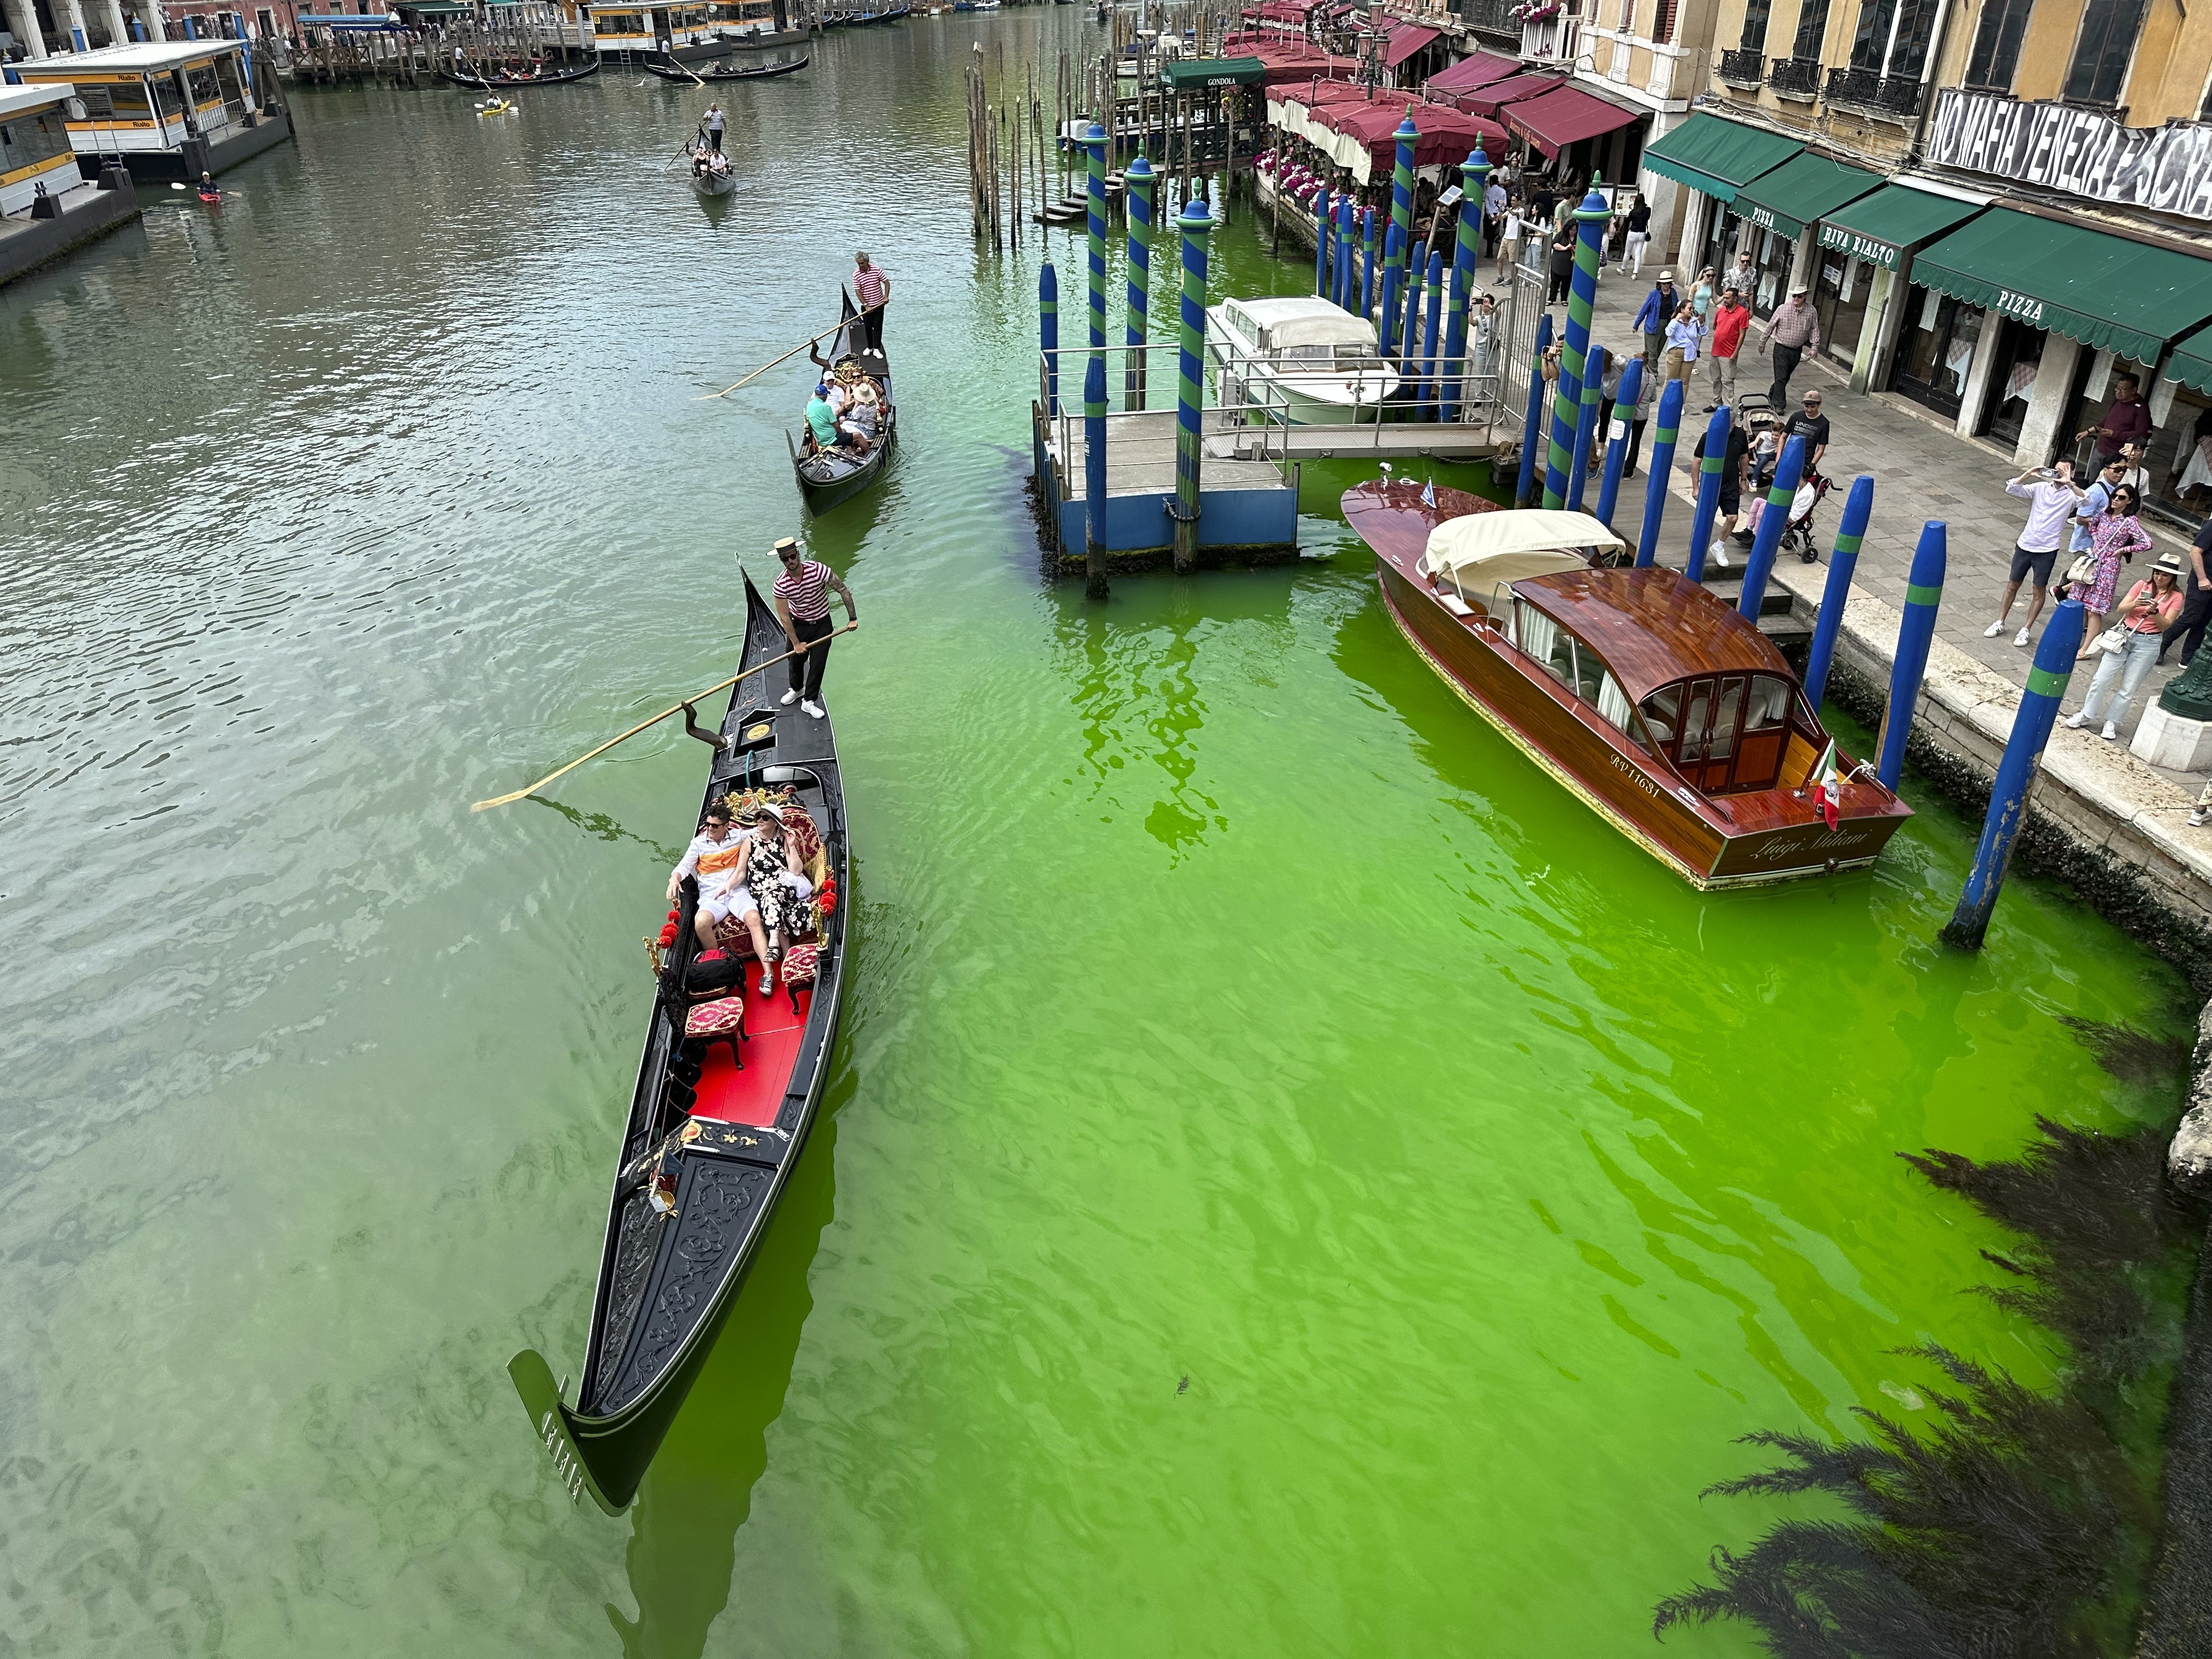 Venice police investigate bright green liquid in Grand Canal - OPB